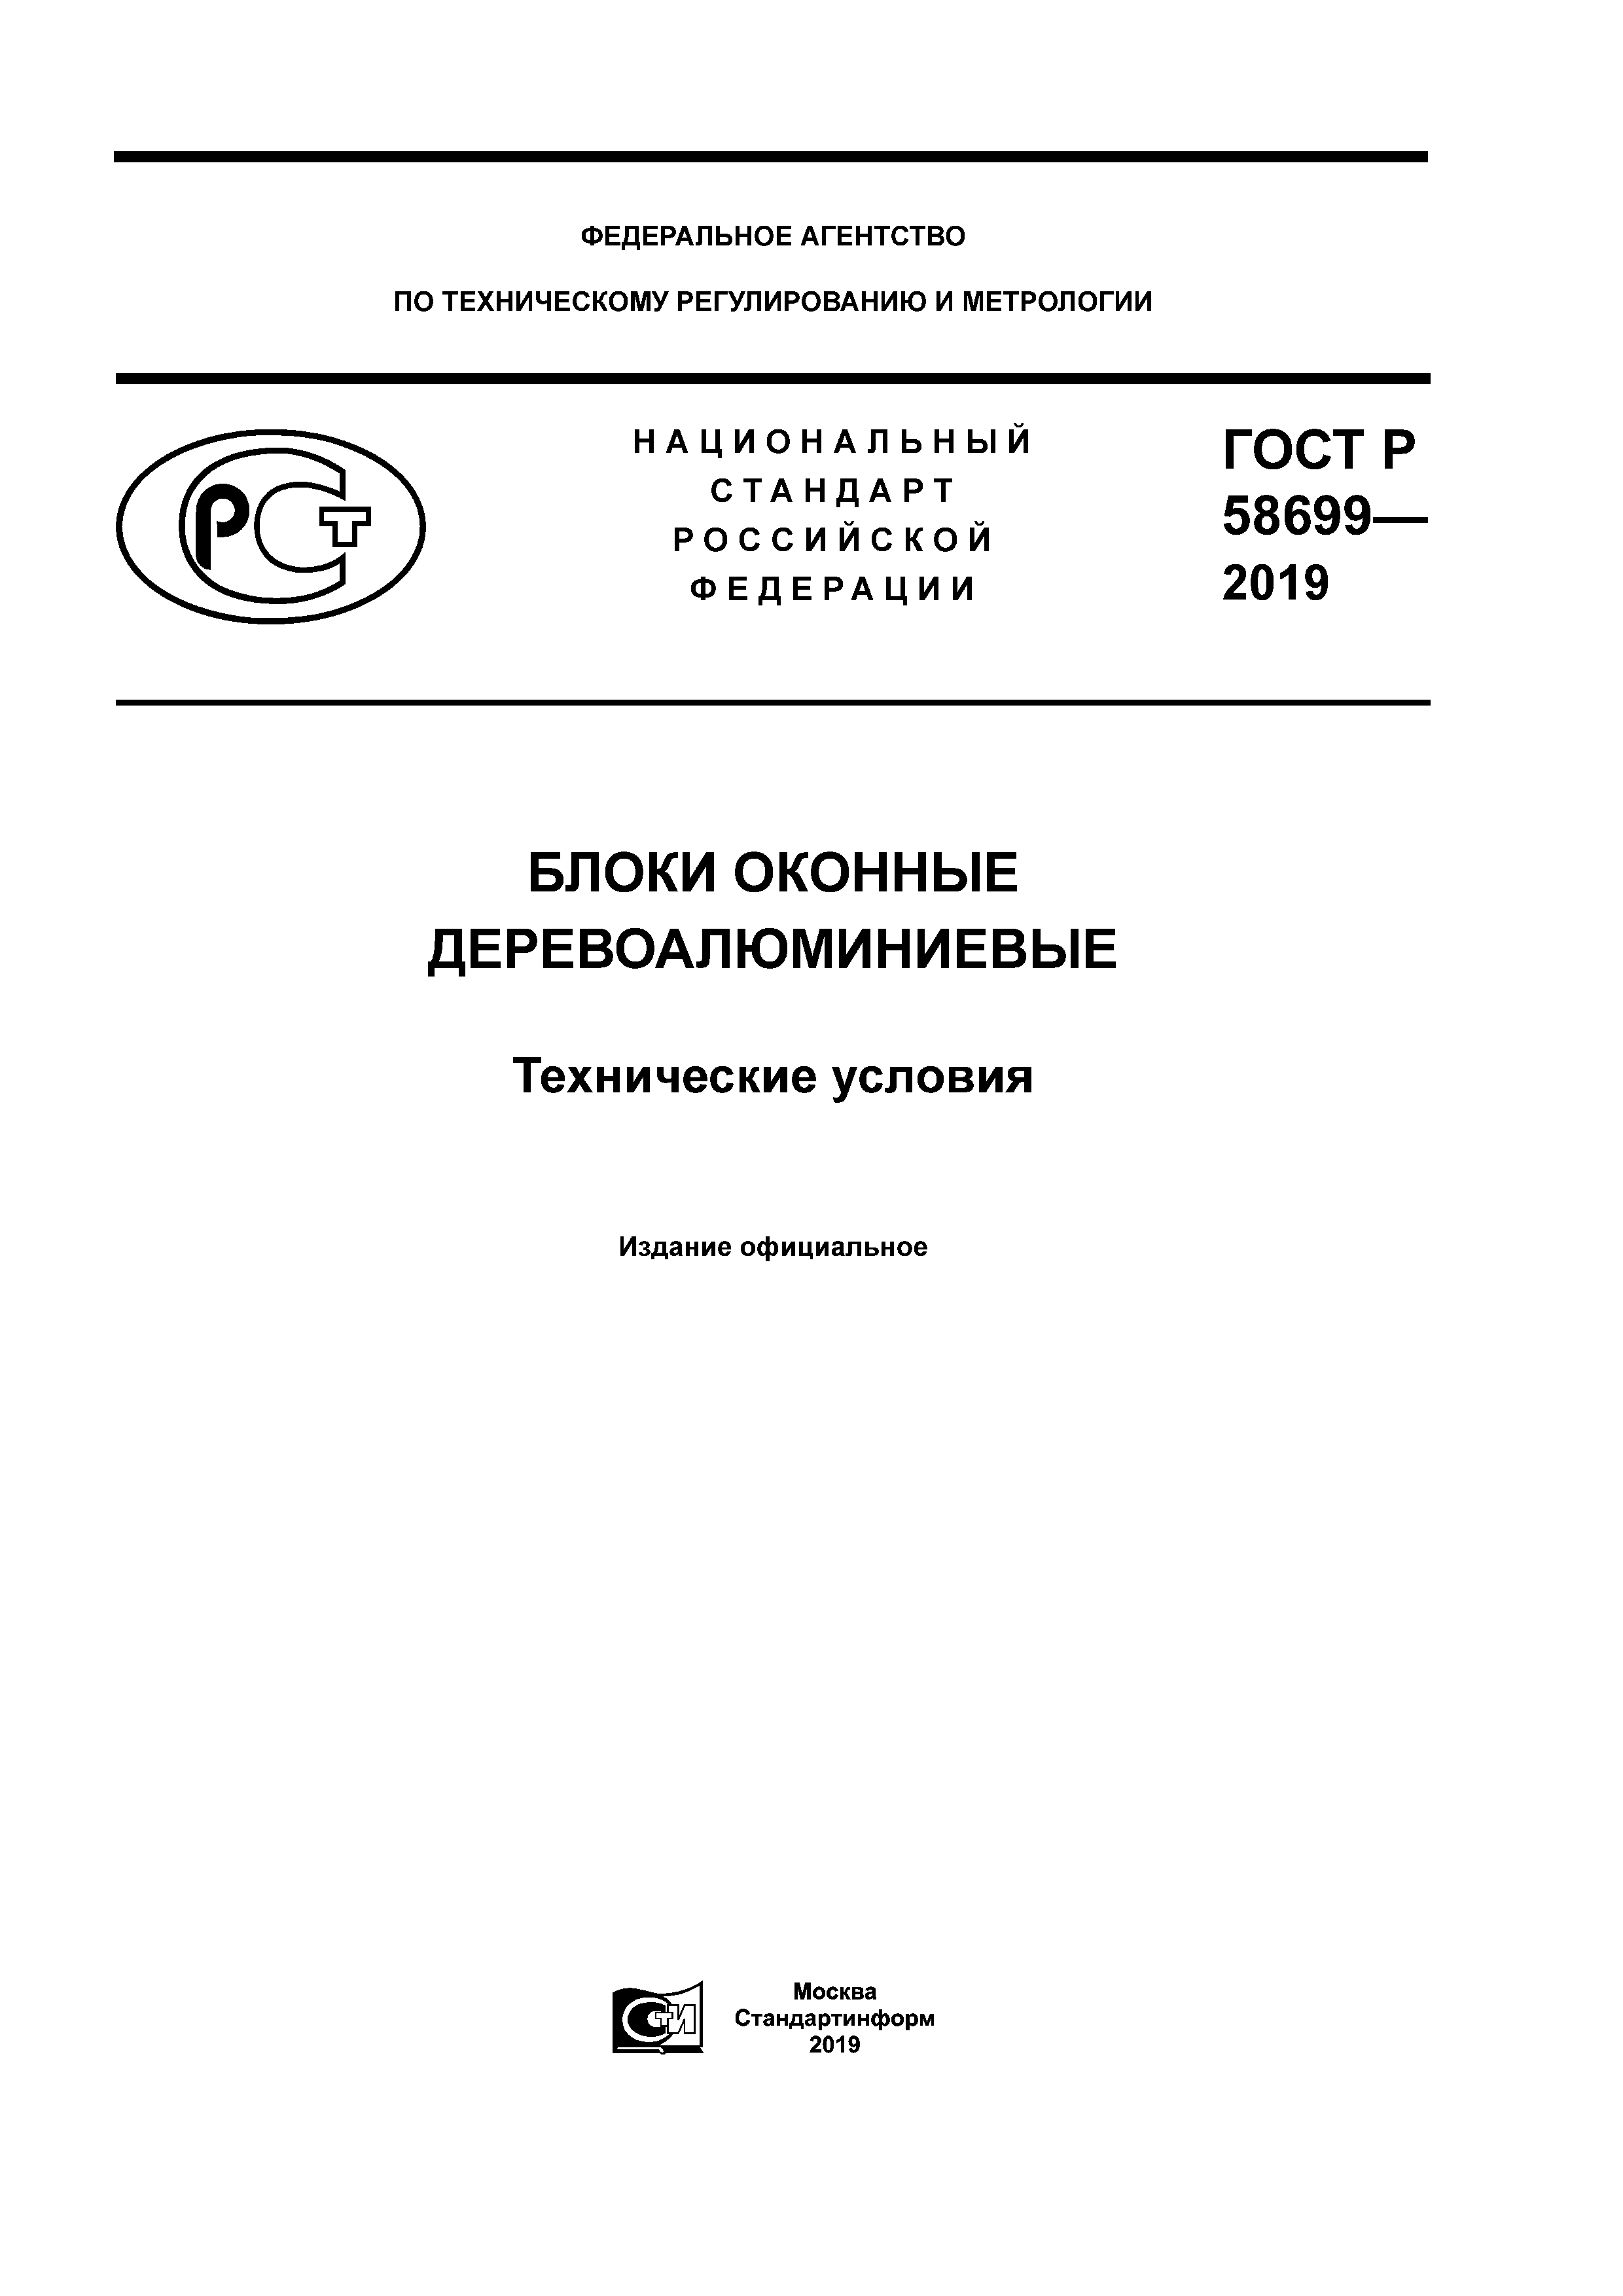 ГОСТ Р 58699-2019